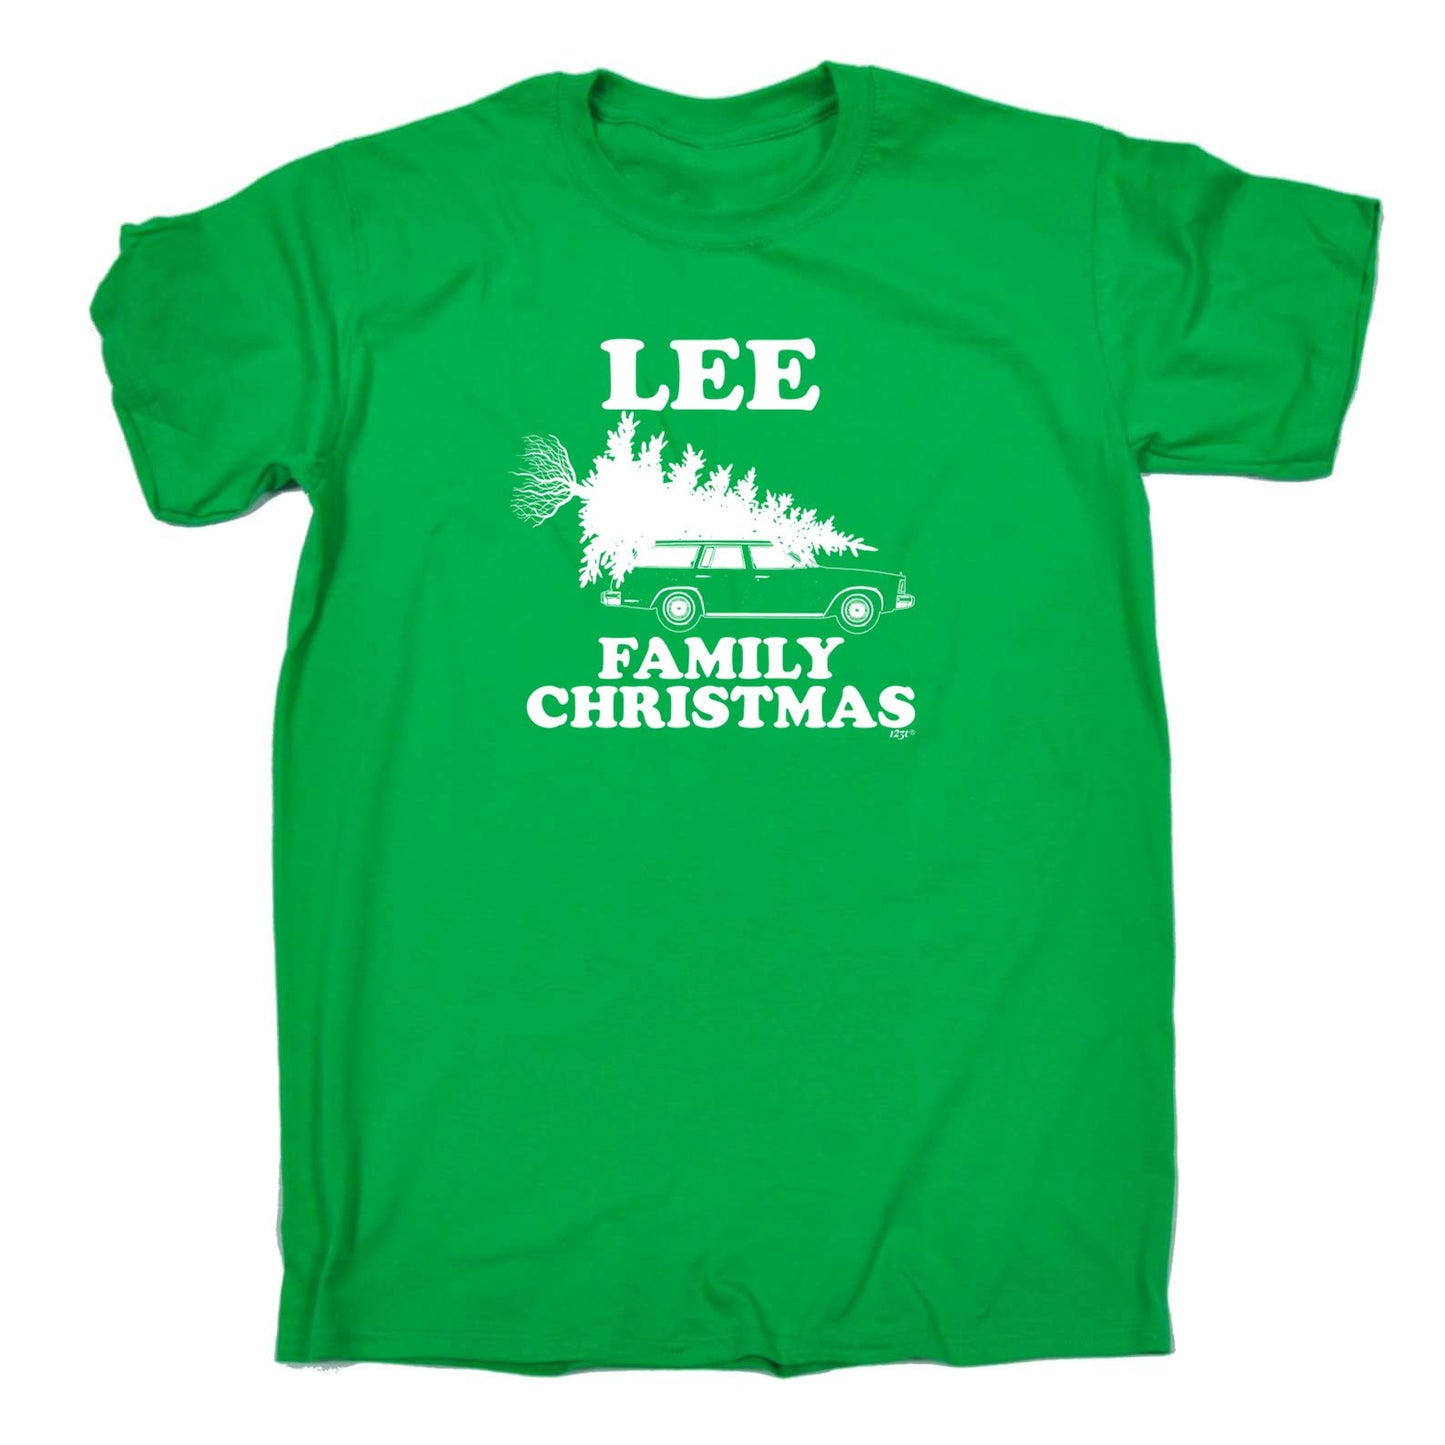 Family Christmas Lee - Mens Xmas Novelty T-Shirt / T Shirt